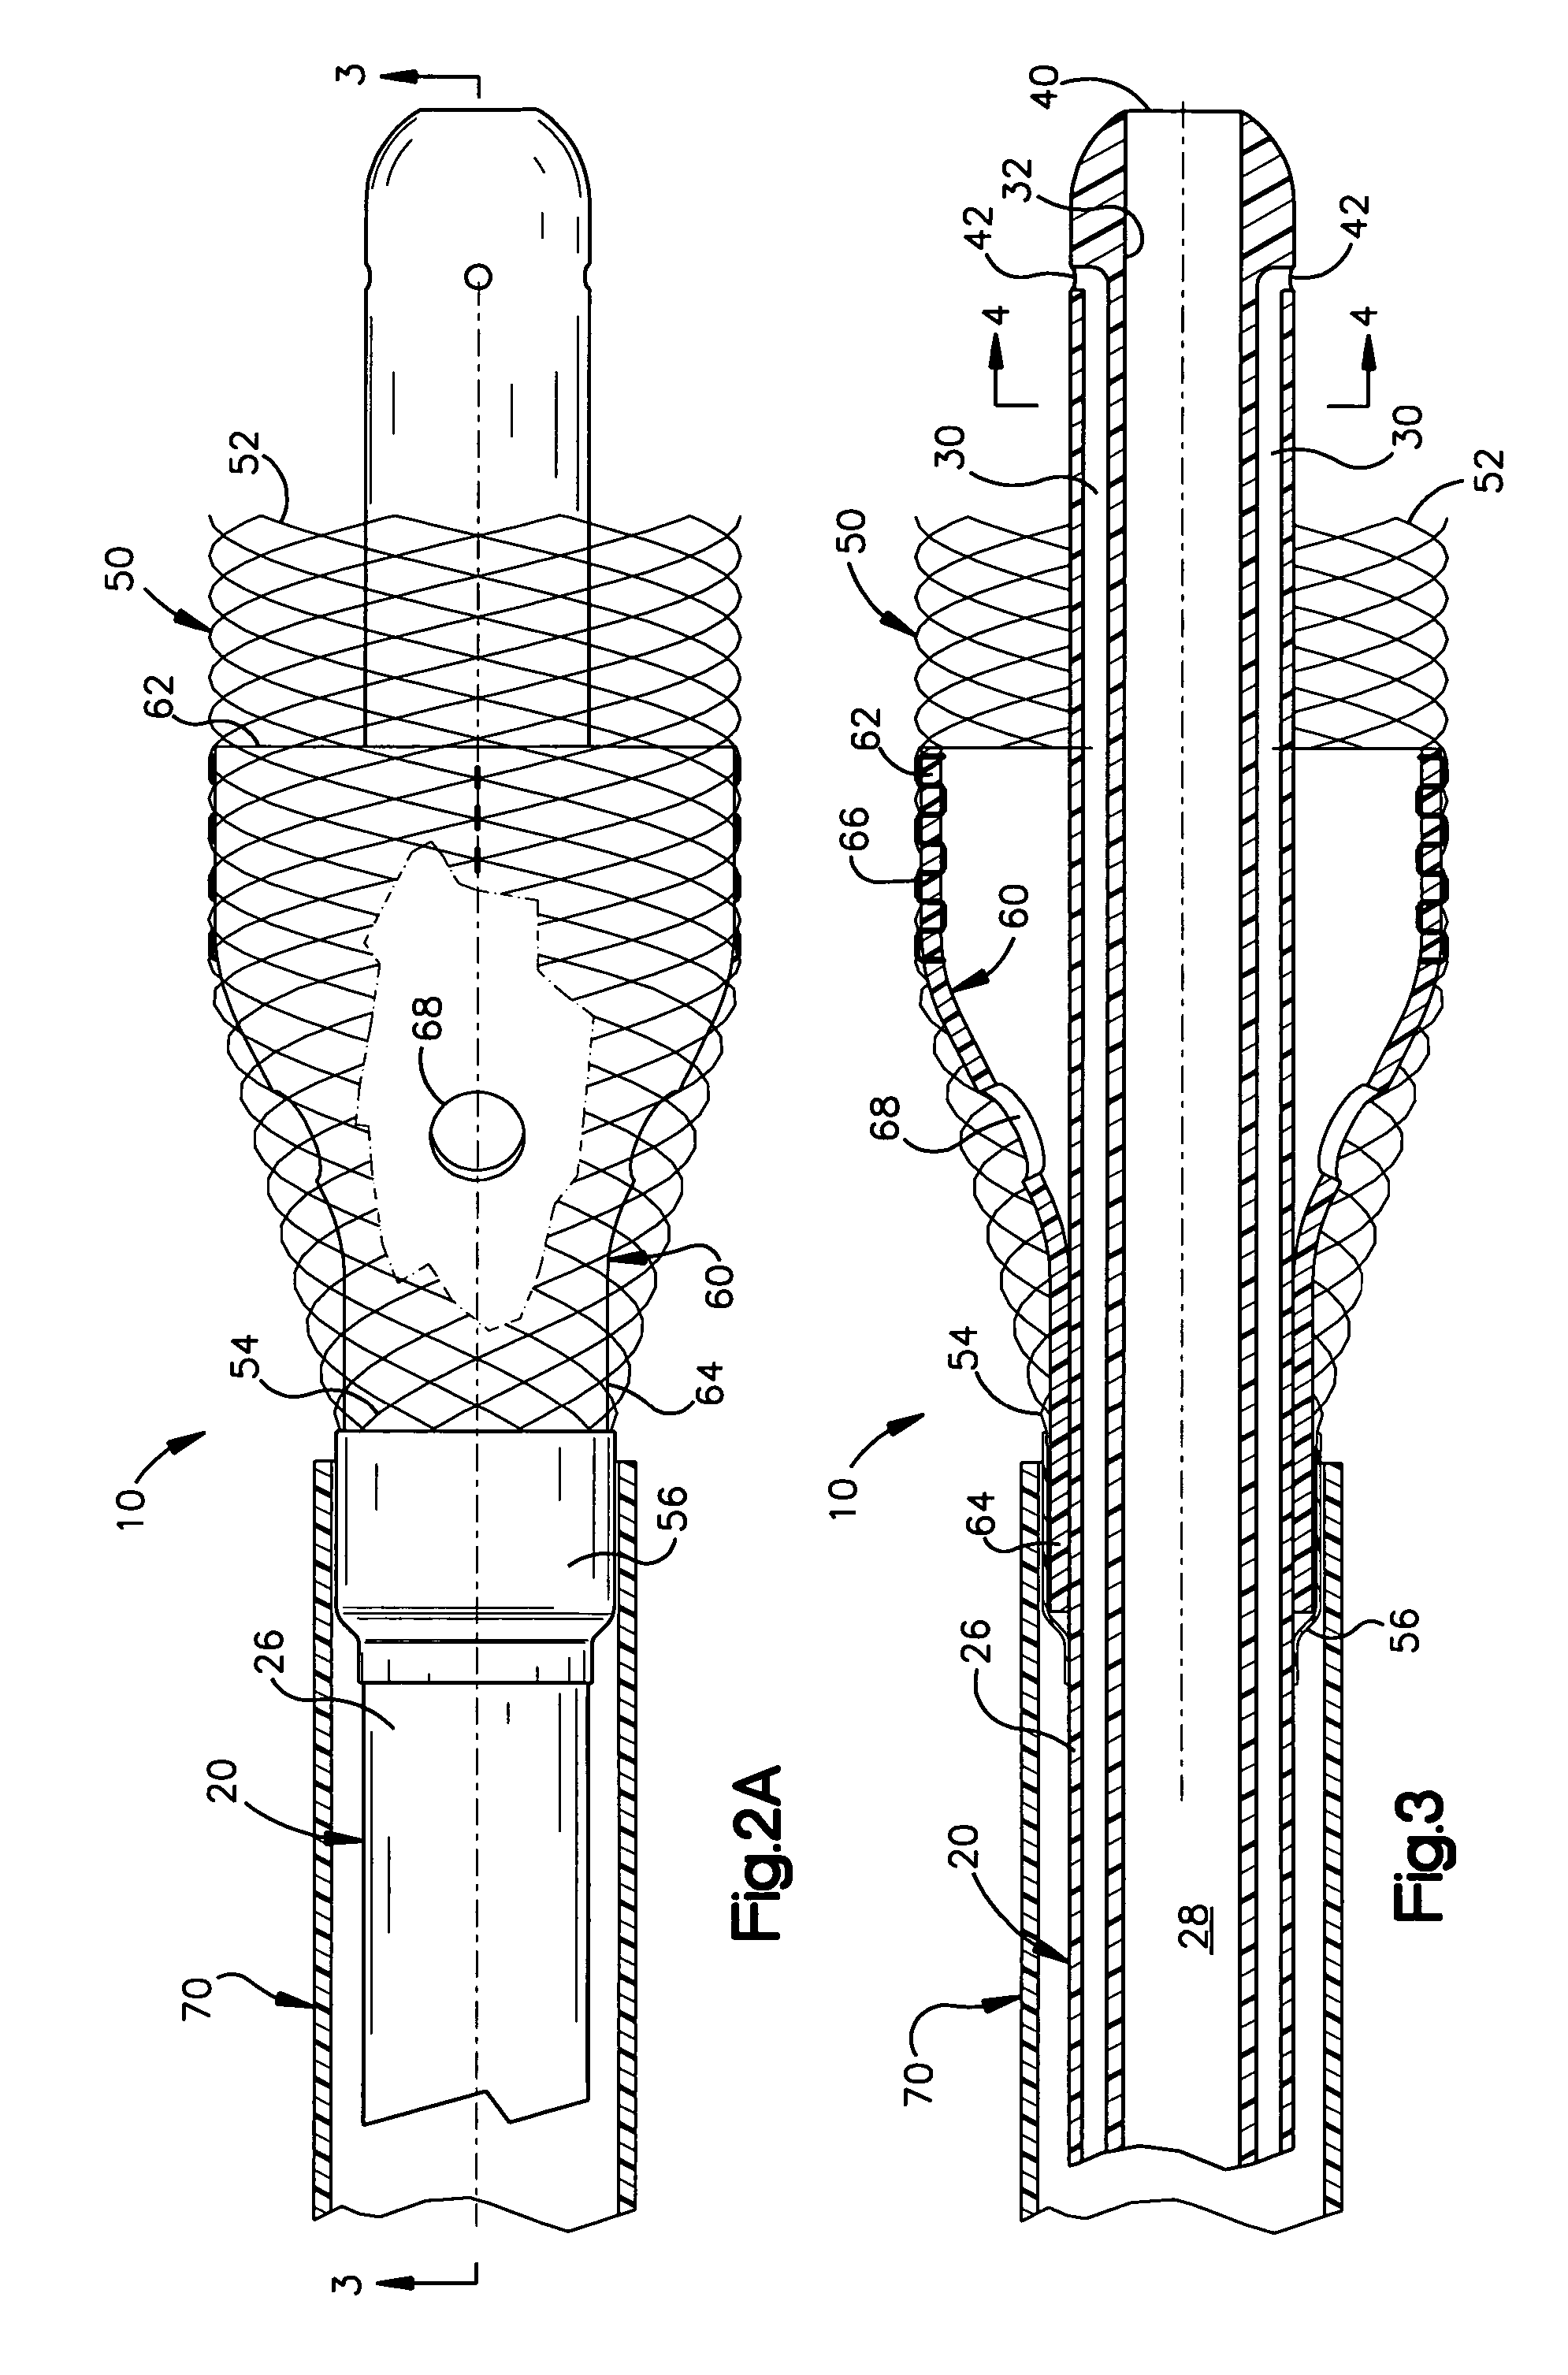 Apparatus for auto-retroperfusion of a coronary vein